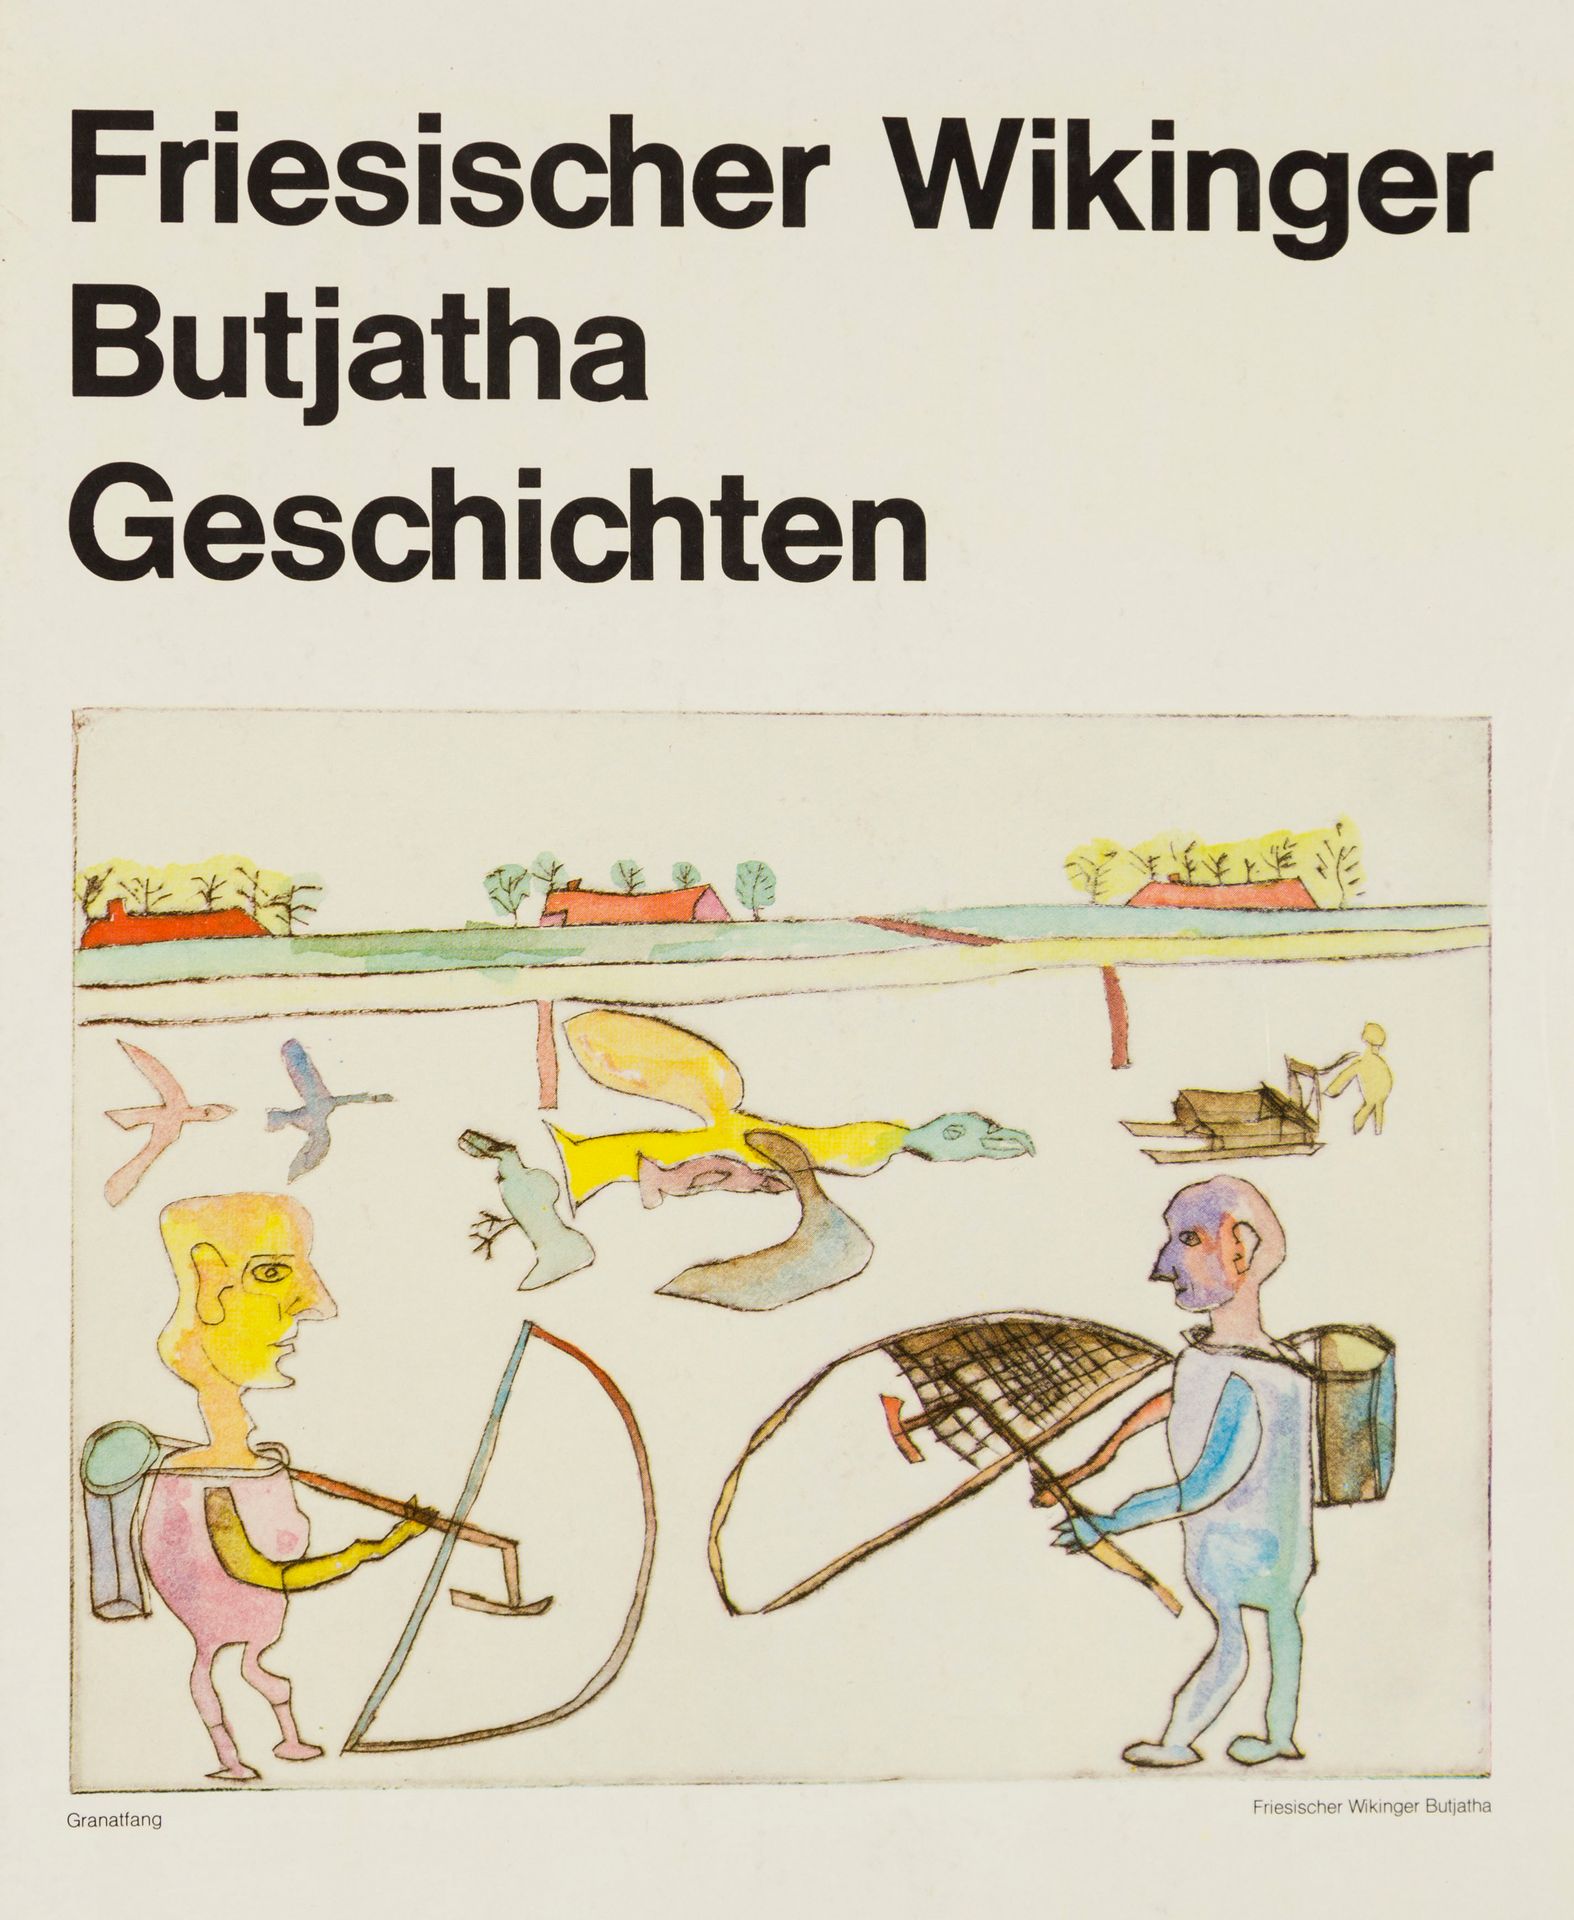 Butjatha. – Friesischer Wikinger Butjatha, Butjatha. -Viking frison Butjatha, hi&hellip;